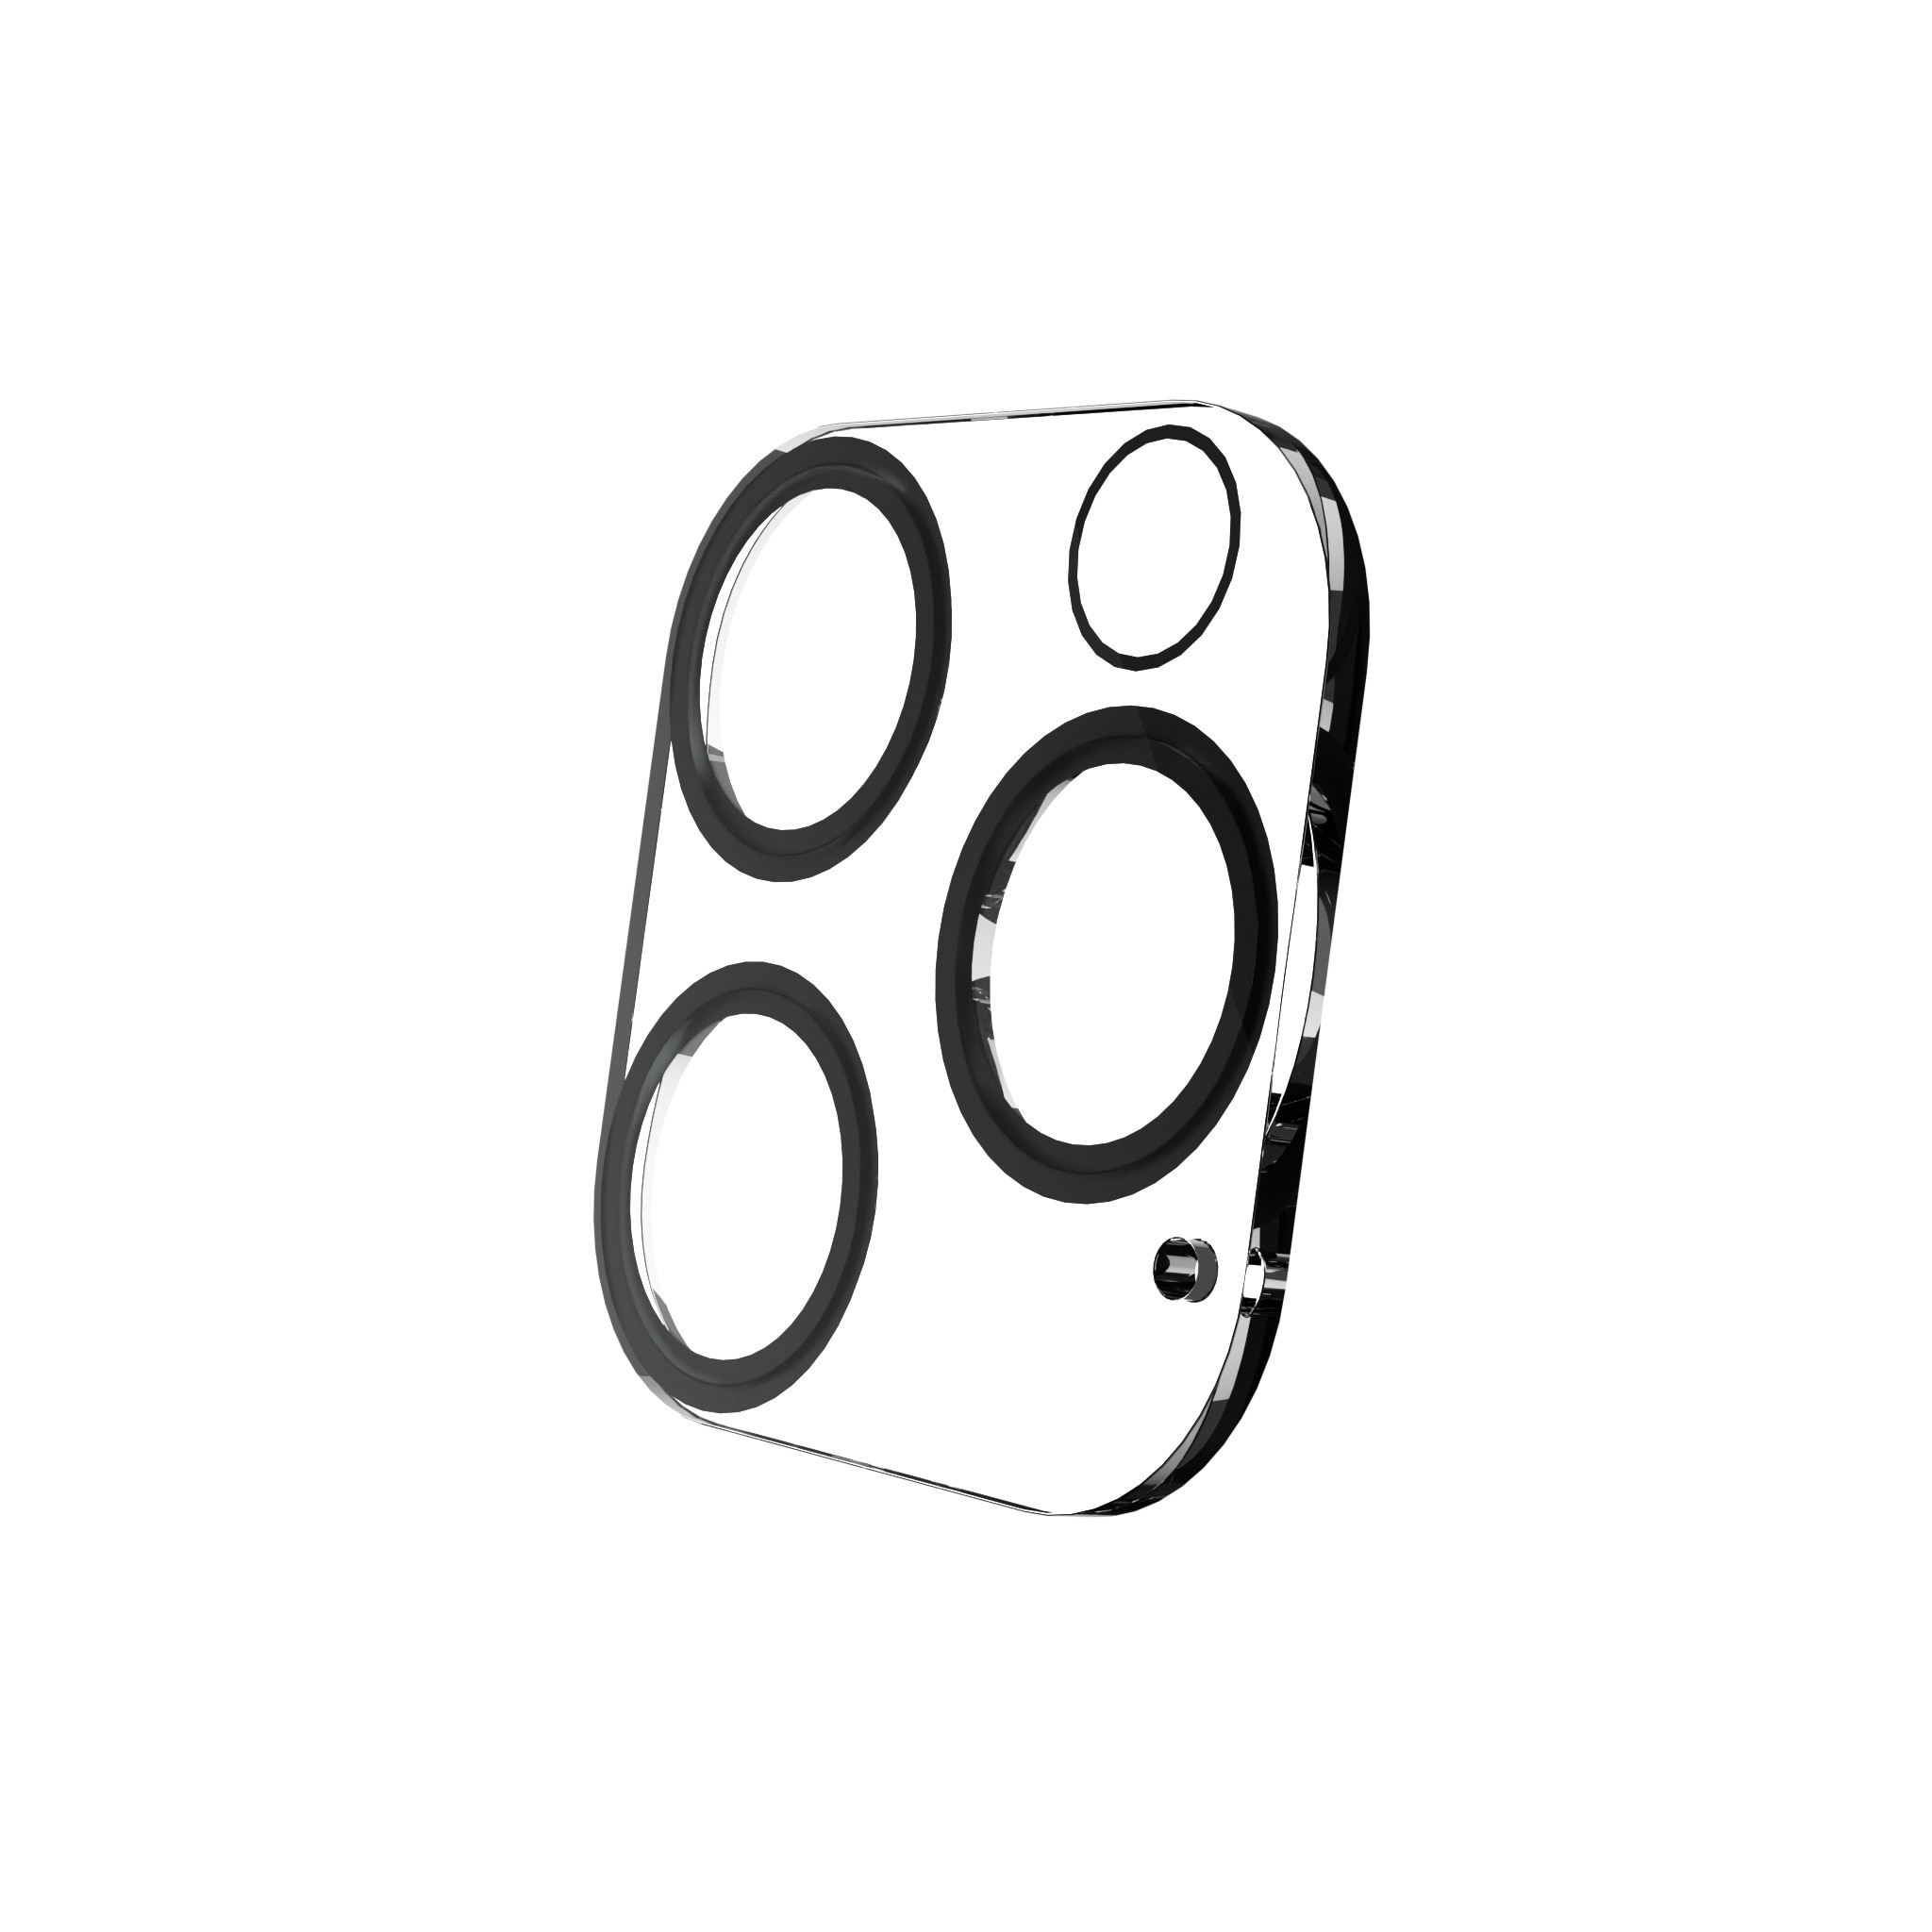 Panzerglas für Kamera Exoglass iPhone 14 Pro